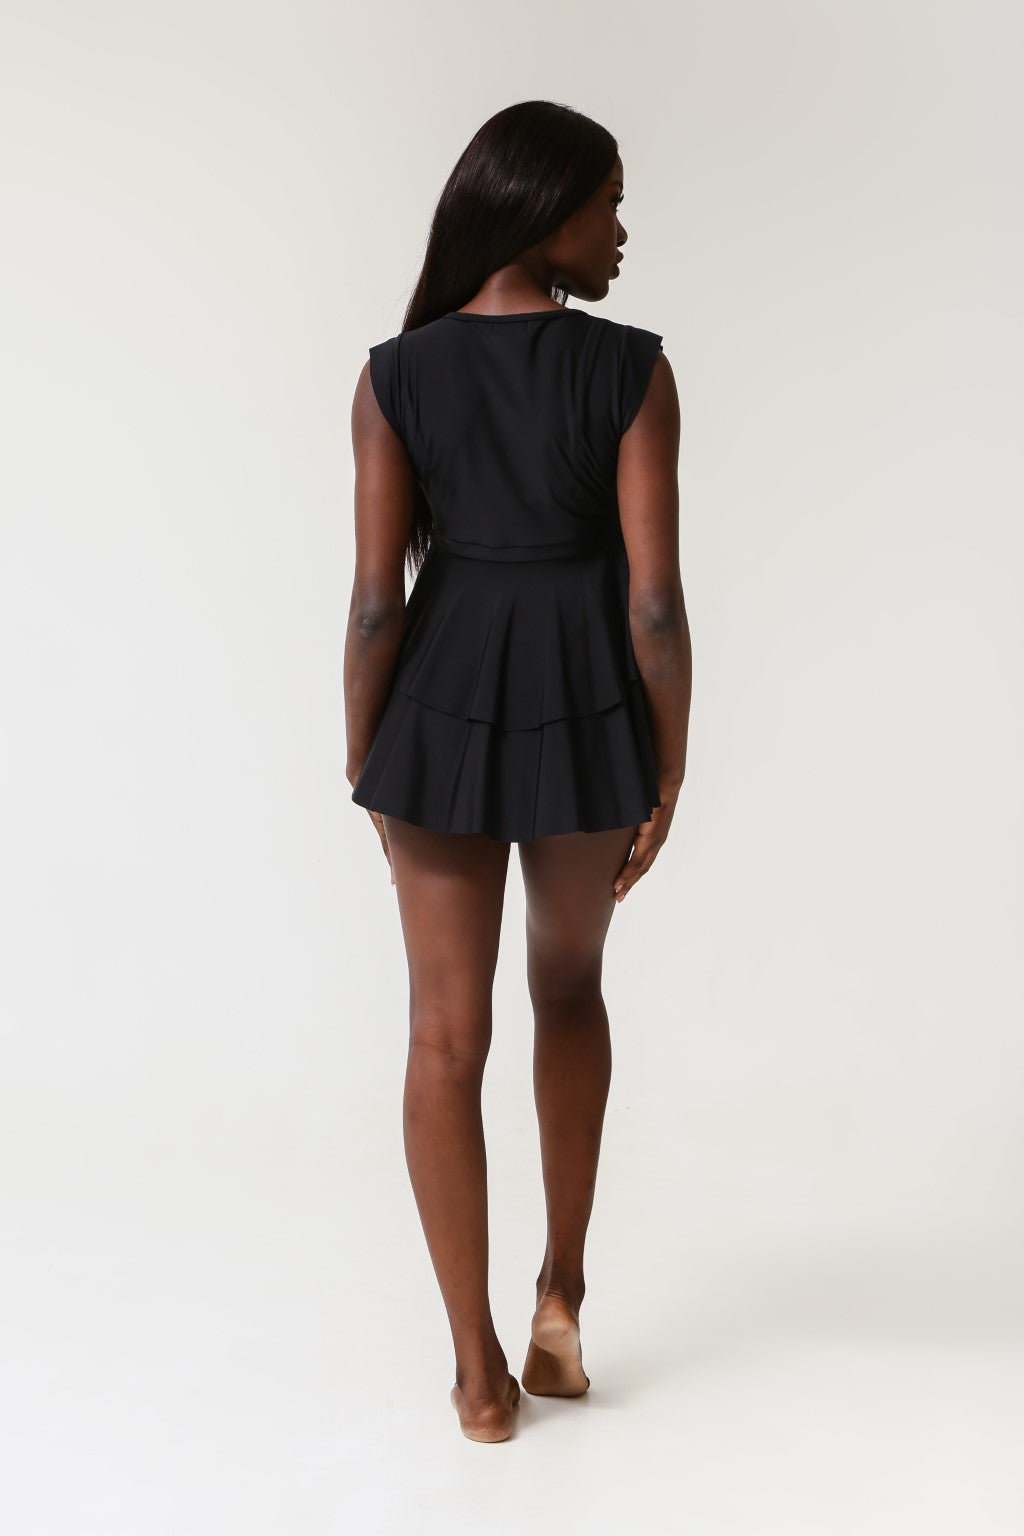 Lanuuk Serena Midi Swimsuit - Black | Short Sleeve One Piece Full Coverage Modest Swimwear Burkini